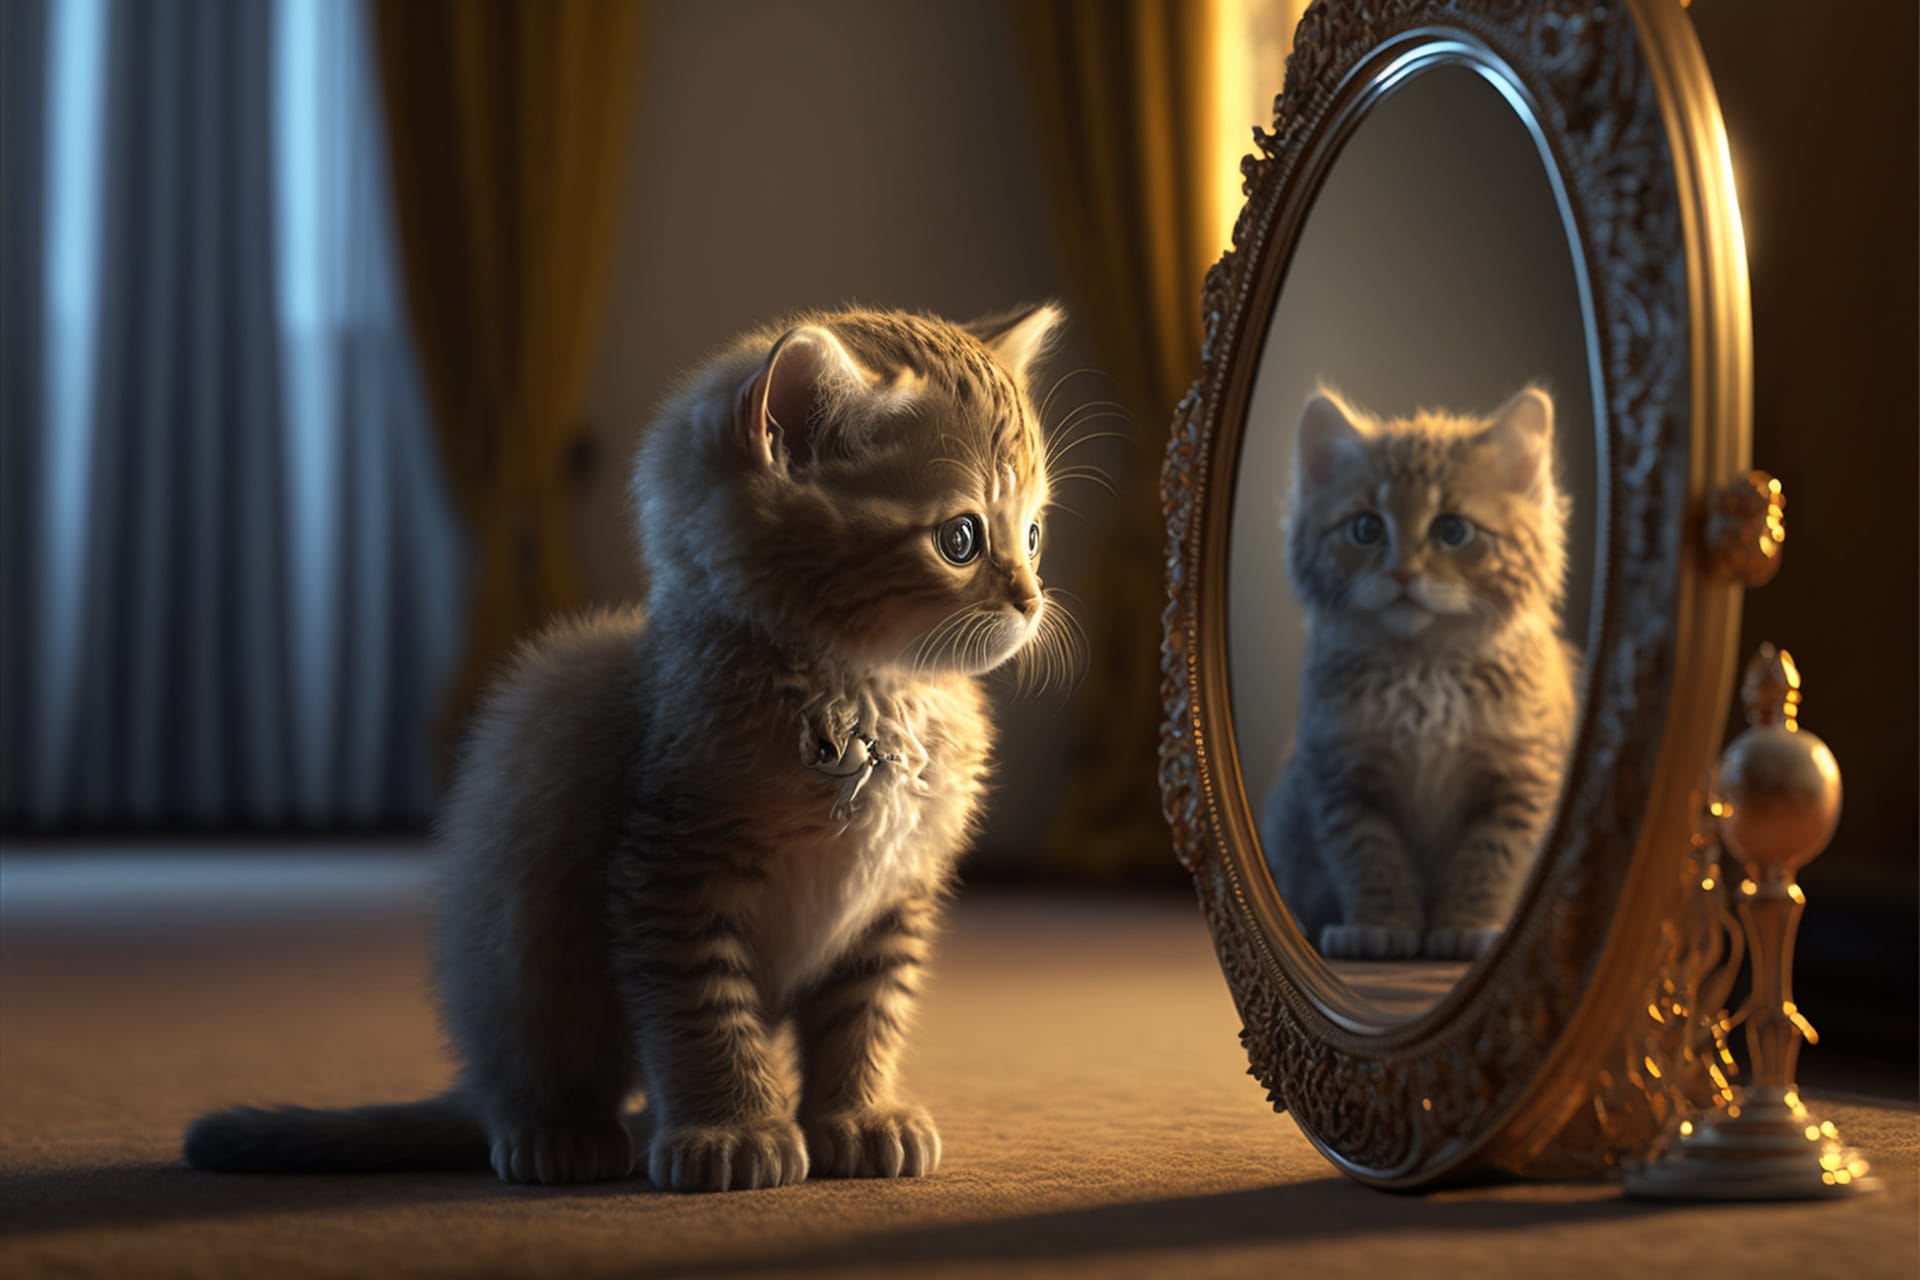 Kitten looking round mirror table male lion inside mirror